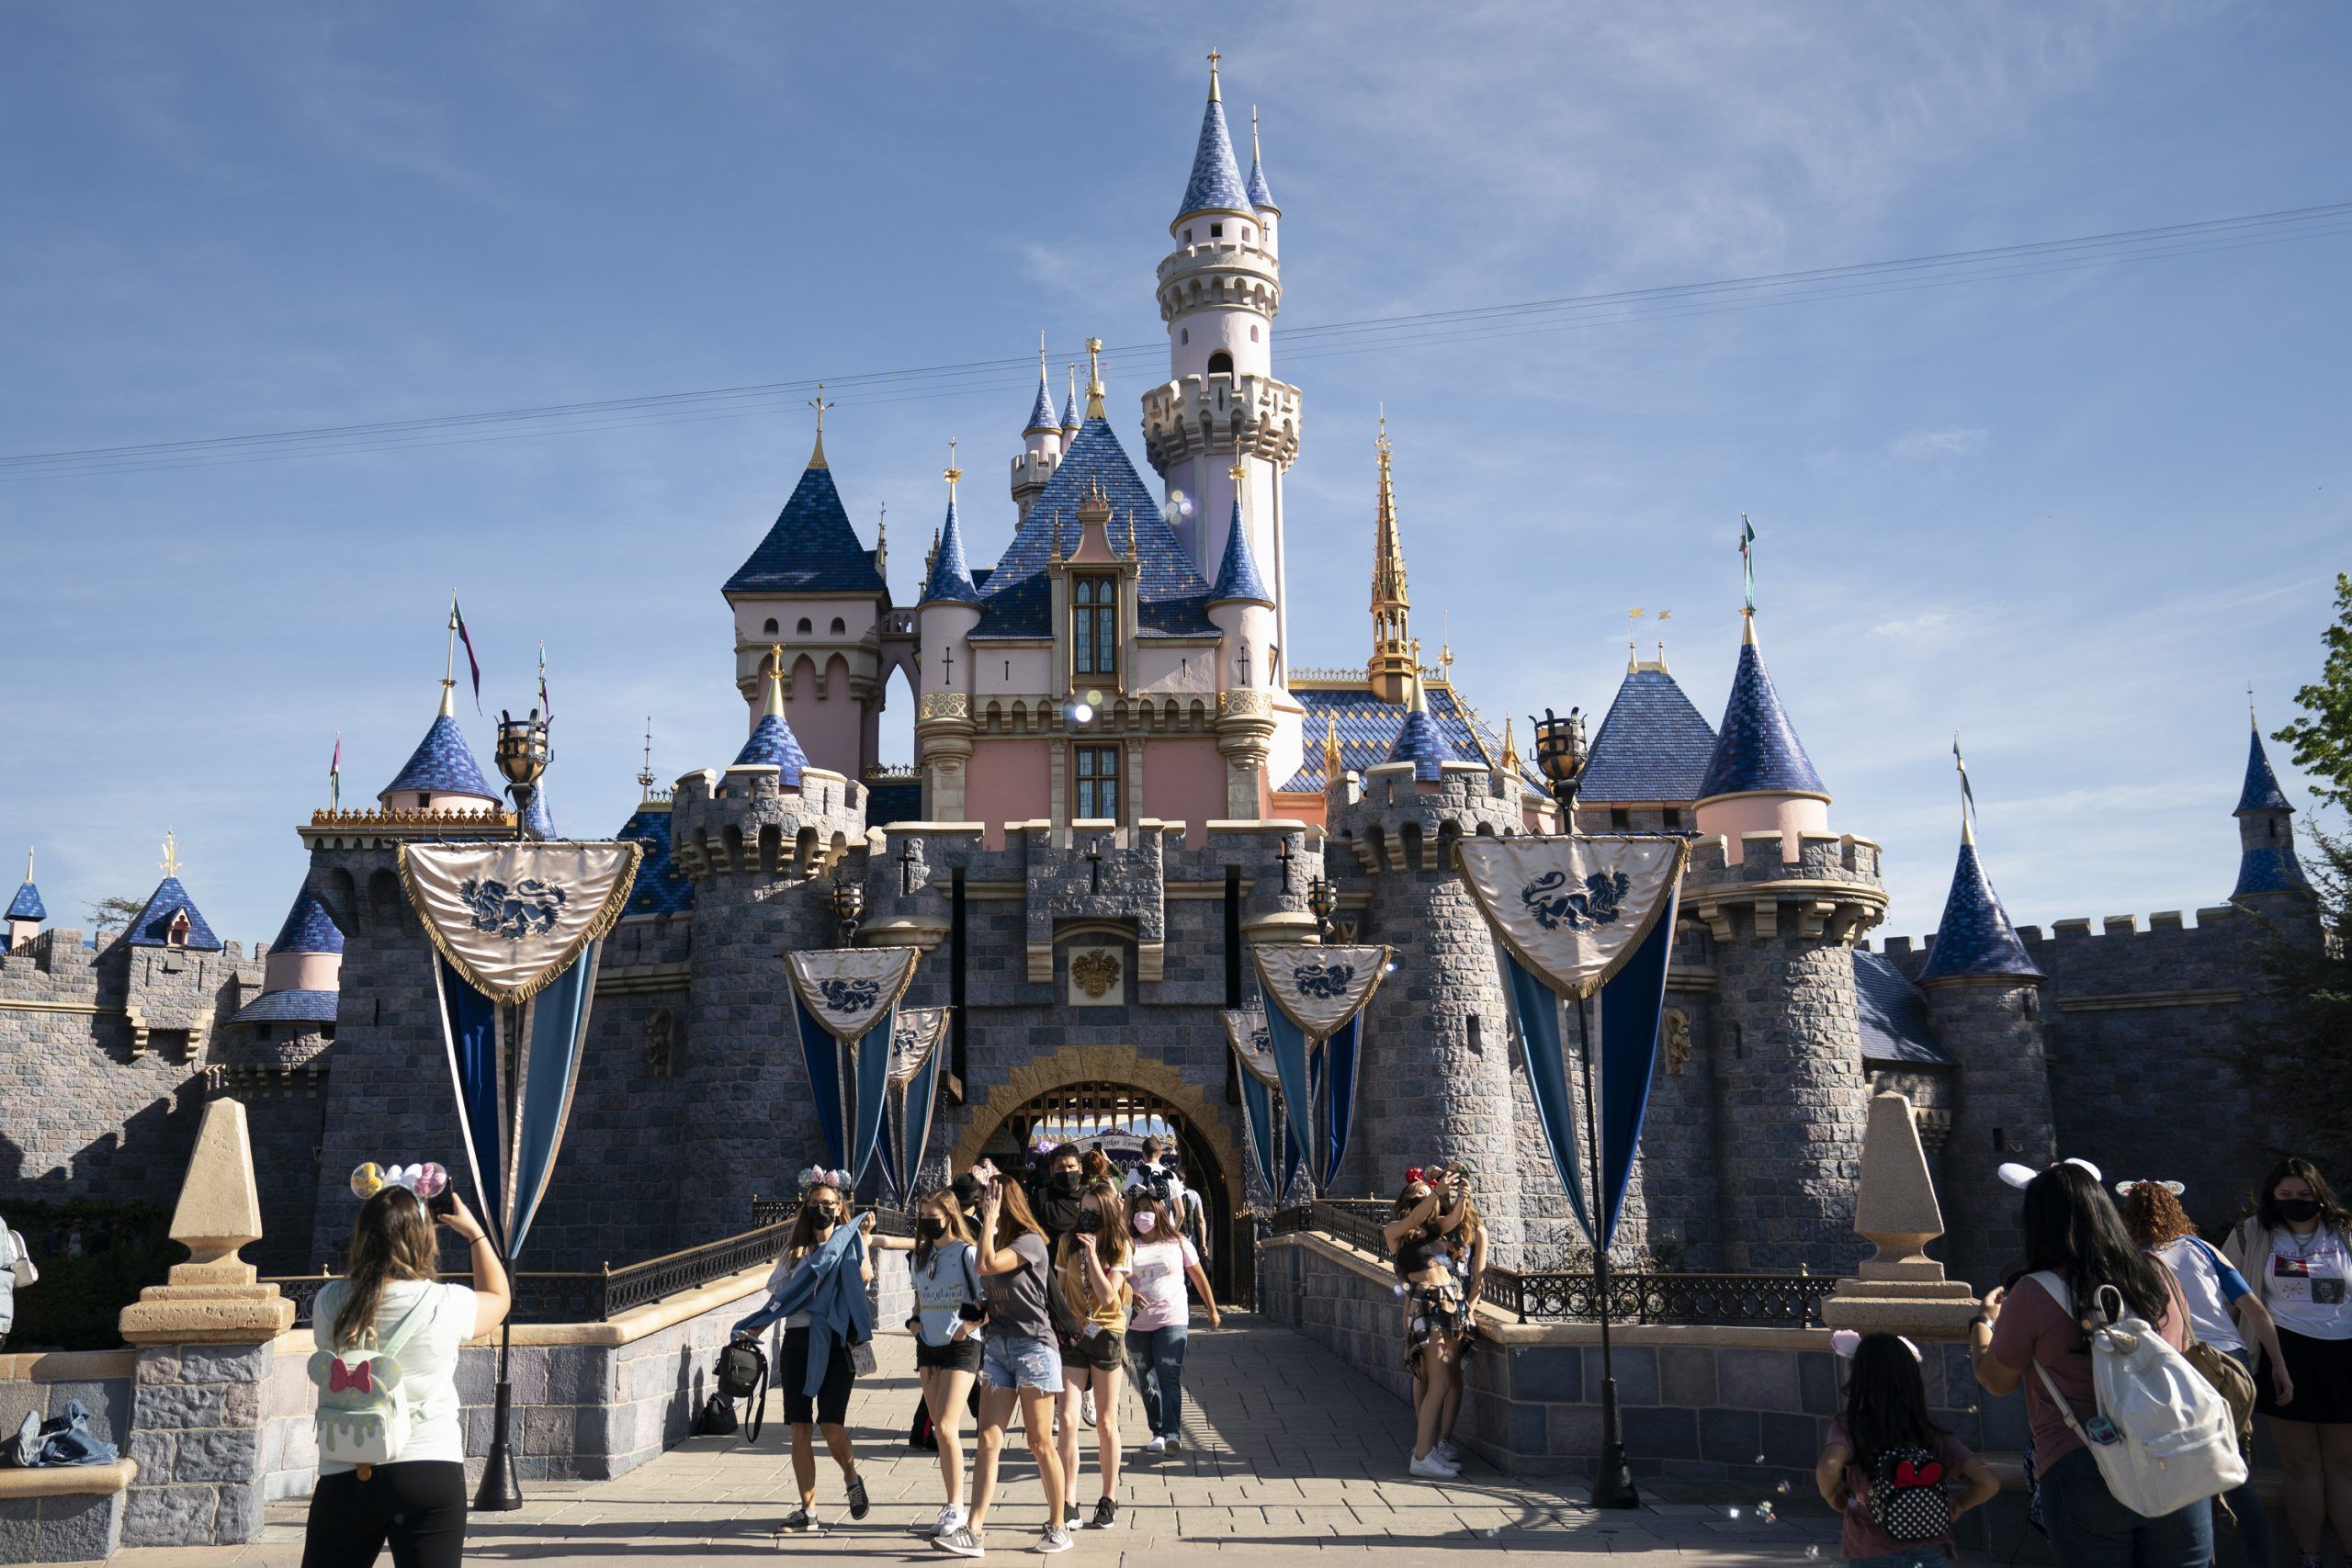 Minnie's House, Rides & Attractions, Disneyland Park